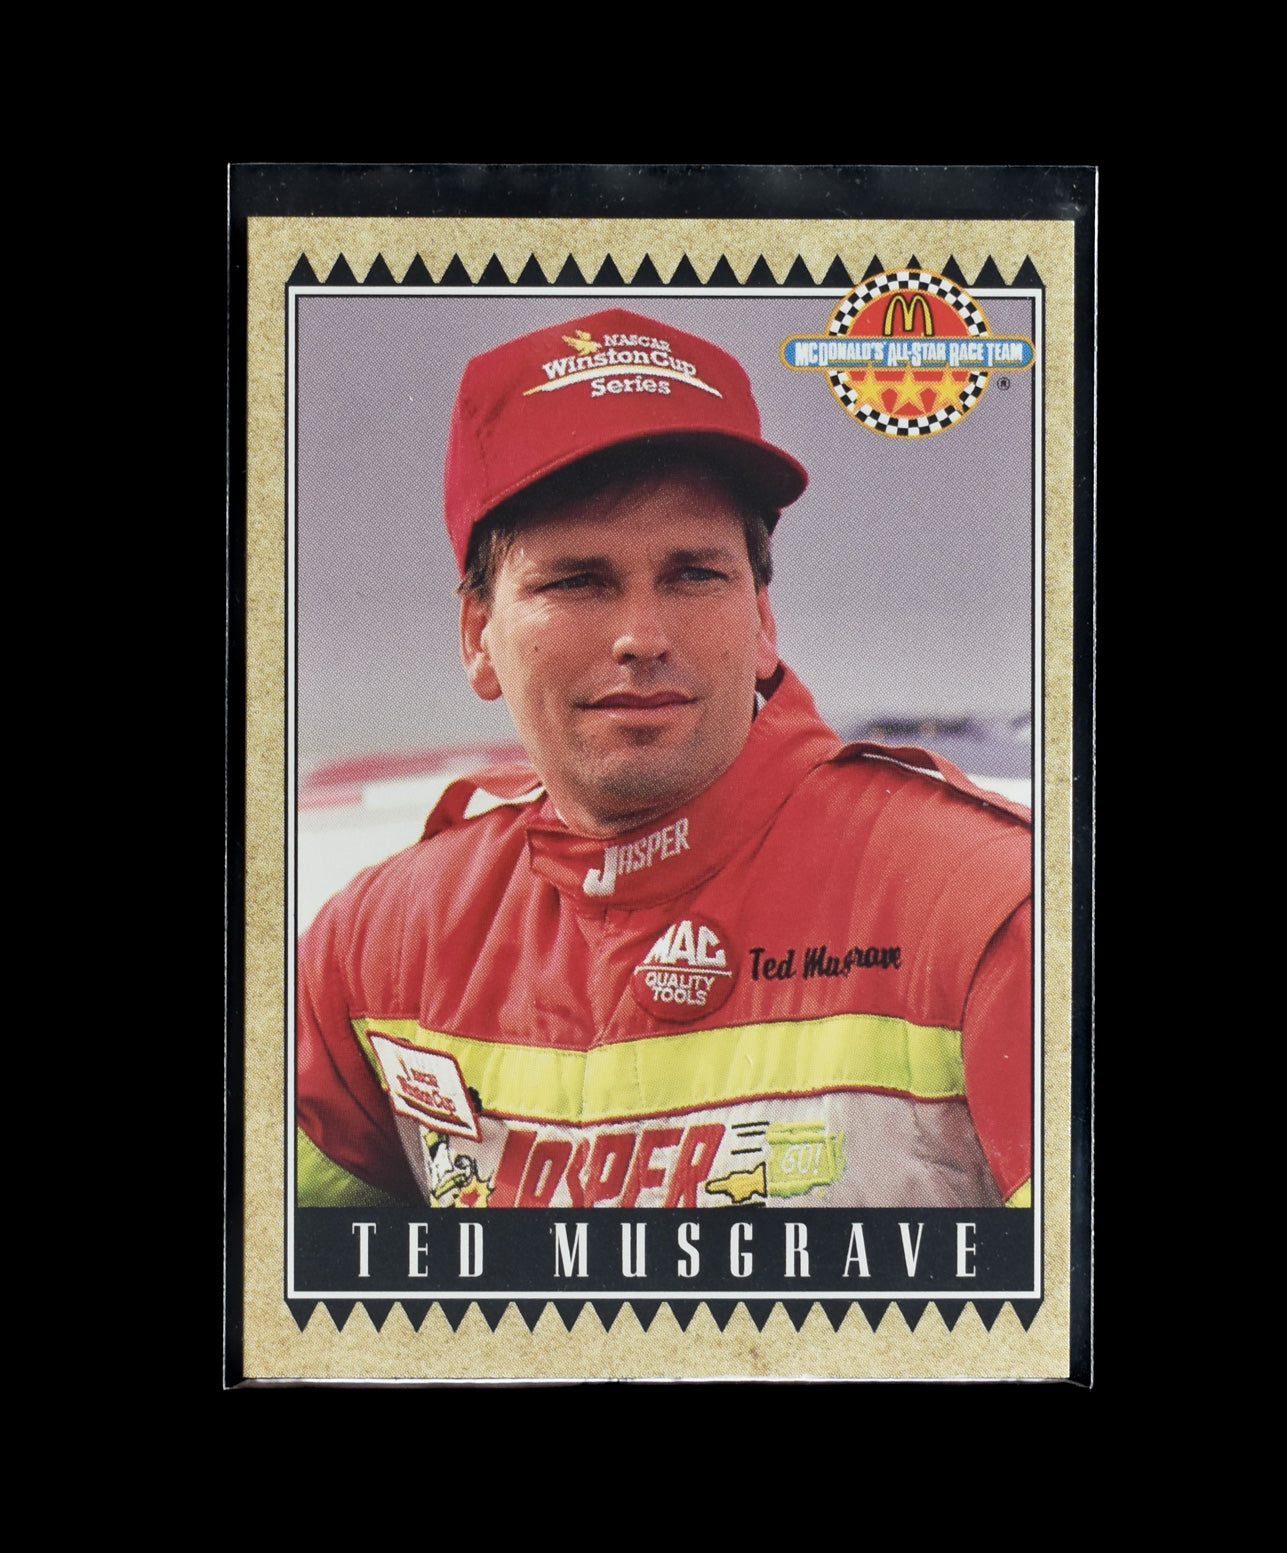 1992 Maxx Racing McDonalds All Star Race Team Card Ted Musgrave 29